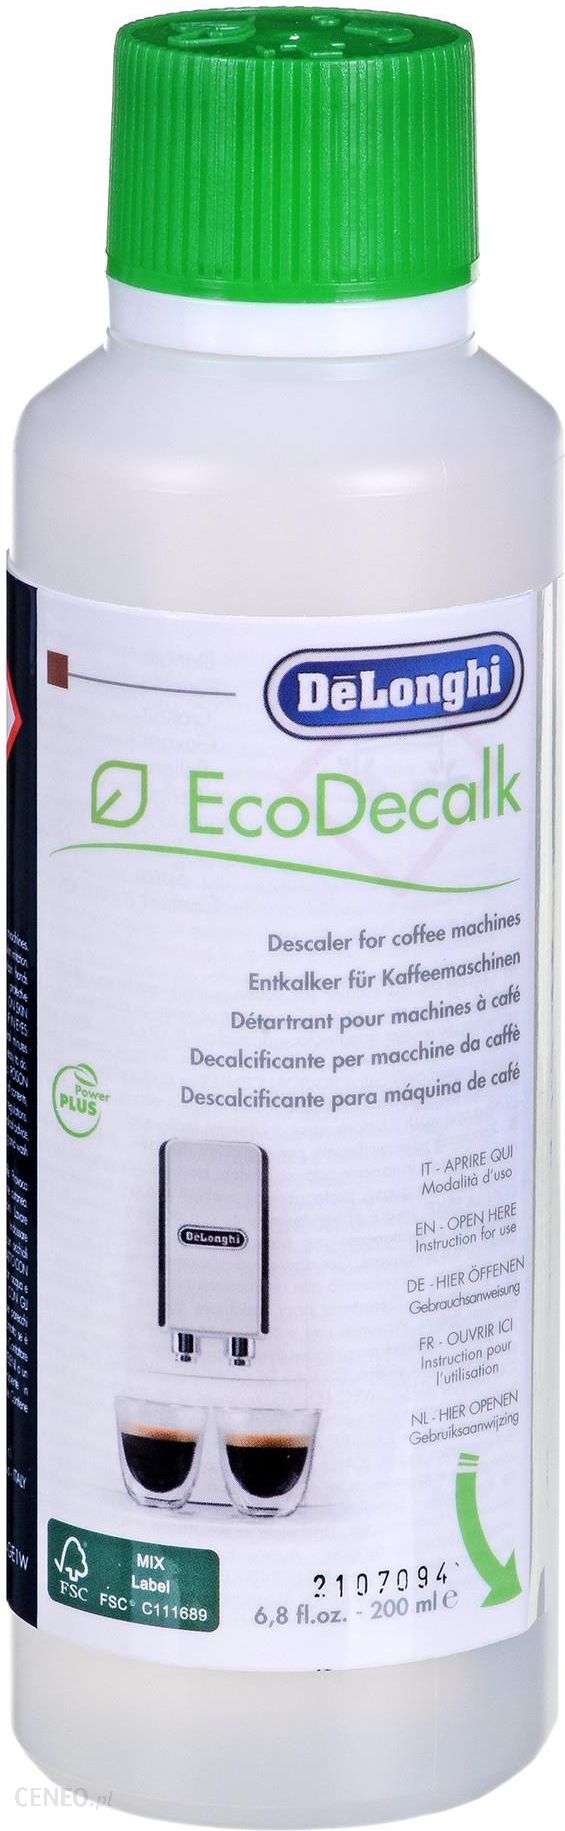 DeLonghi DLSC200 EcoDecalk 2x100 ml descaler